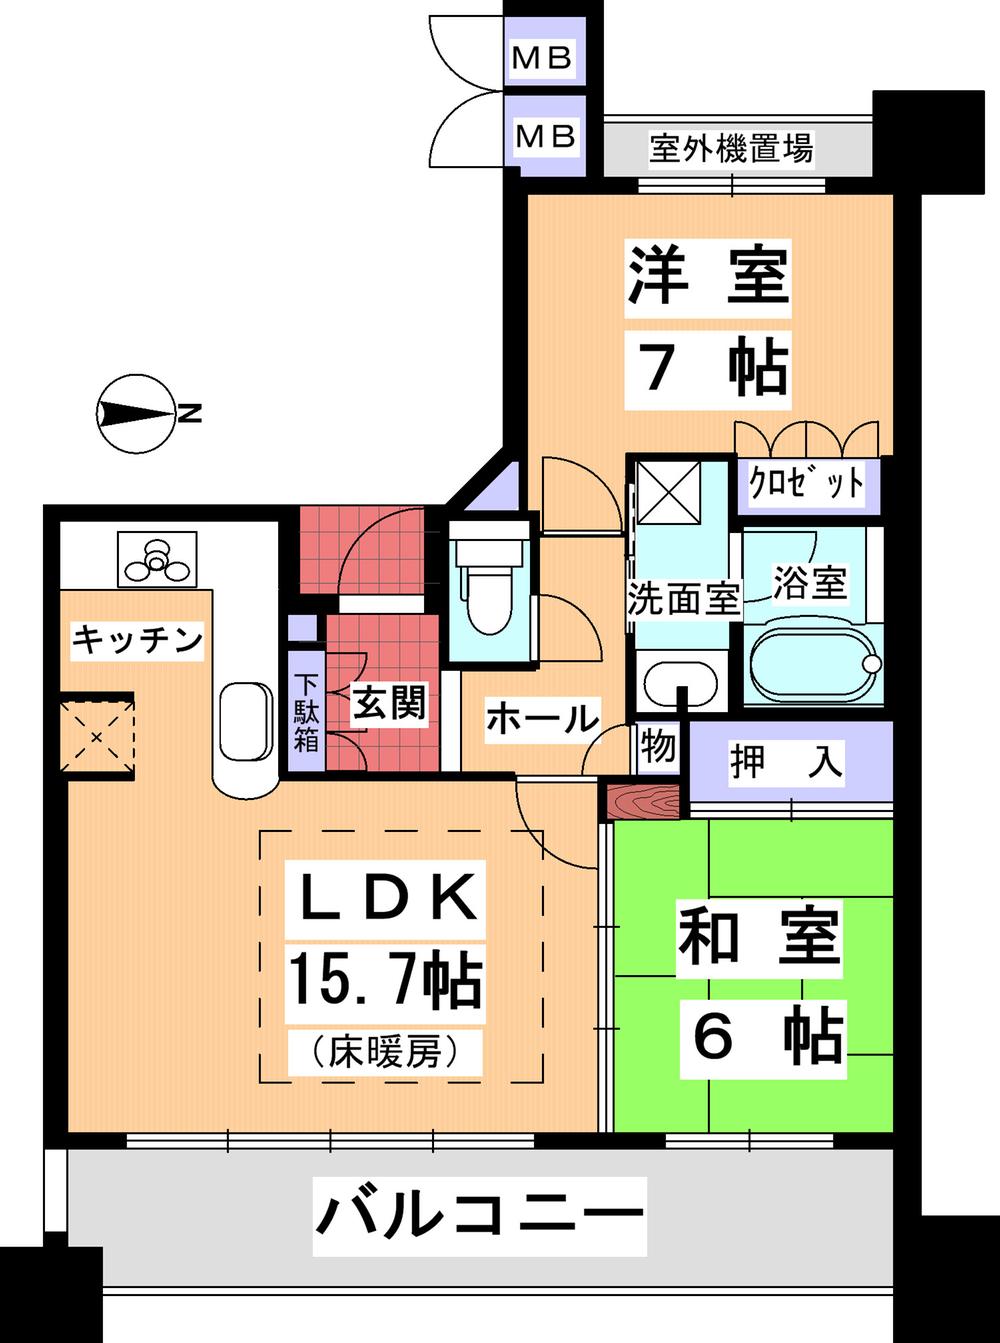 Floor plan. 2LDK, Price 49,800,000 yen, Occupied area 63.67 sq m , Balcony area 12.6 sq m